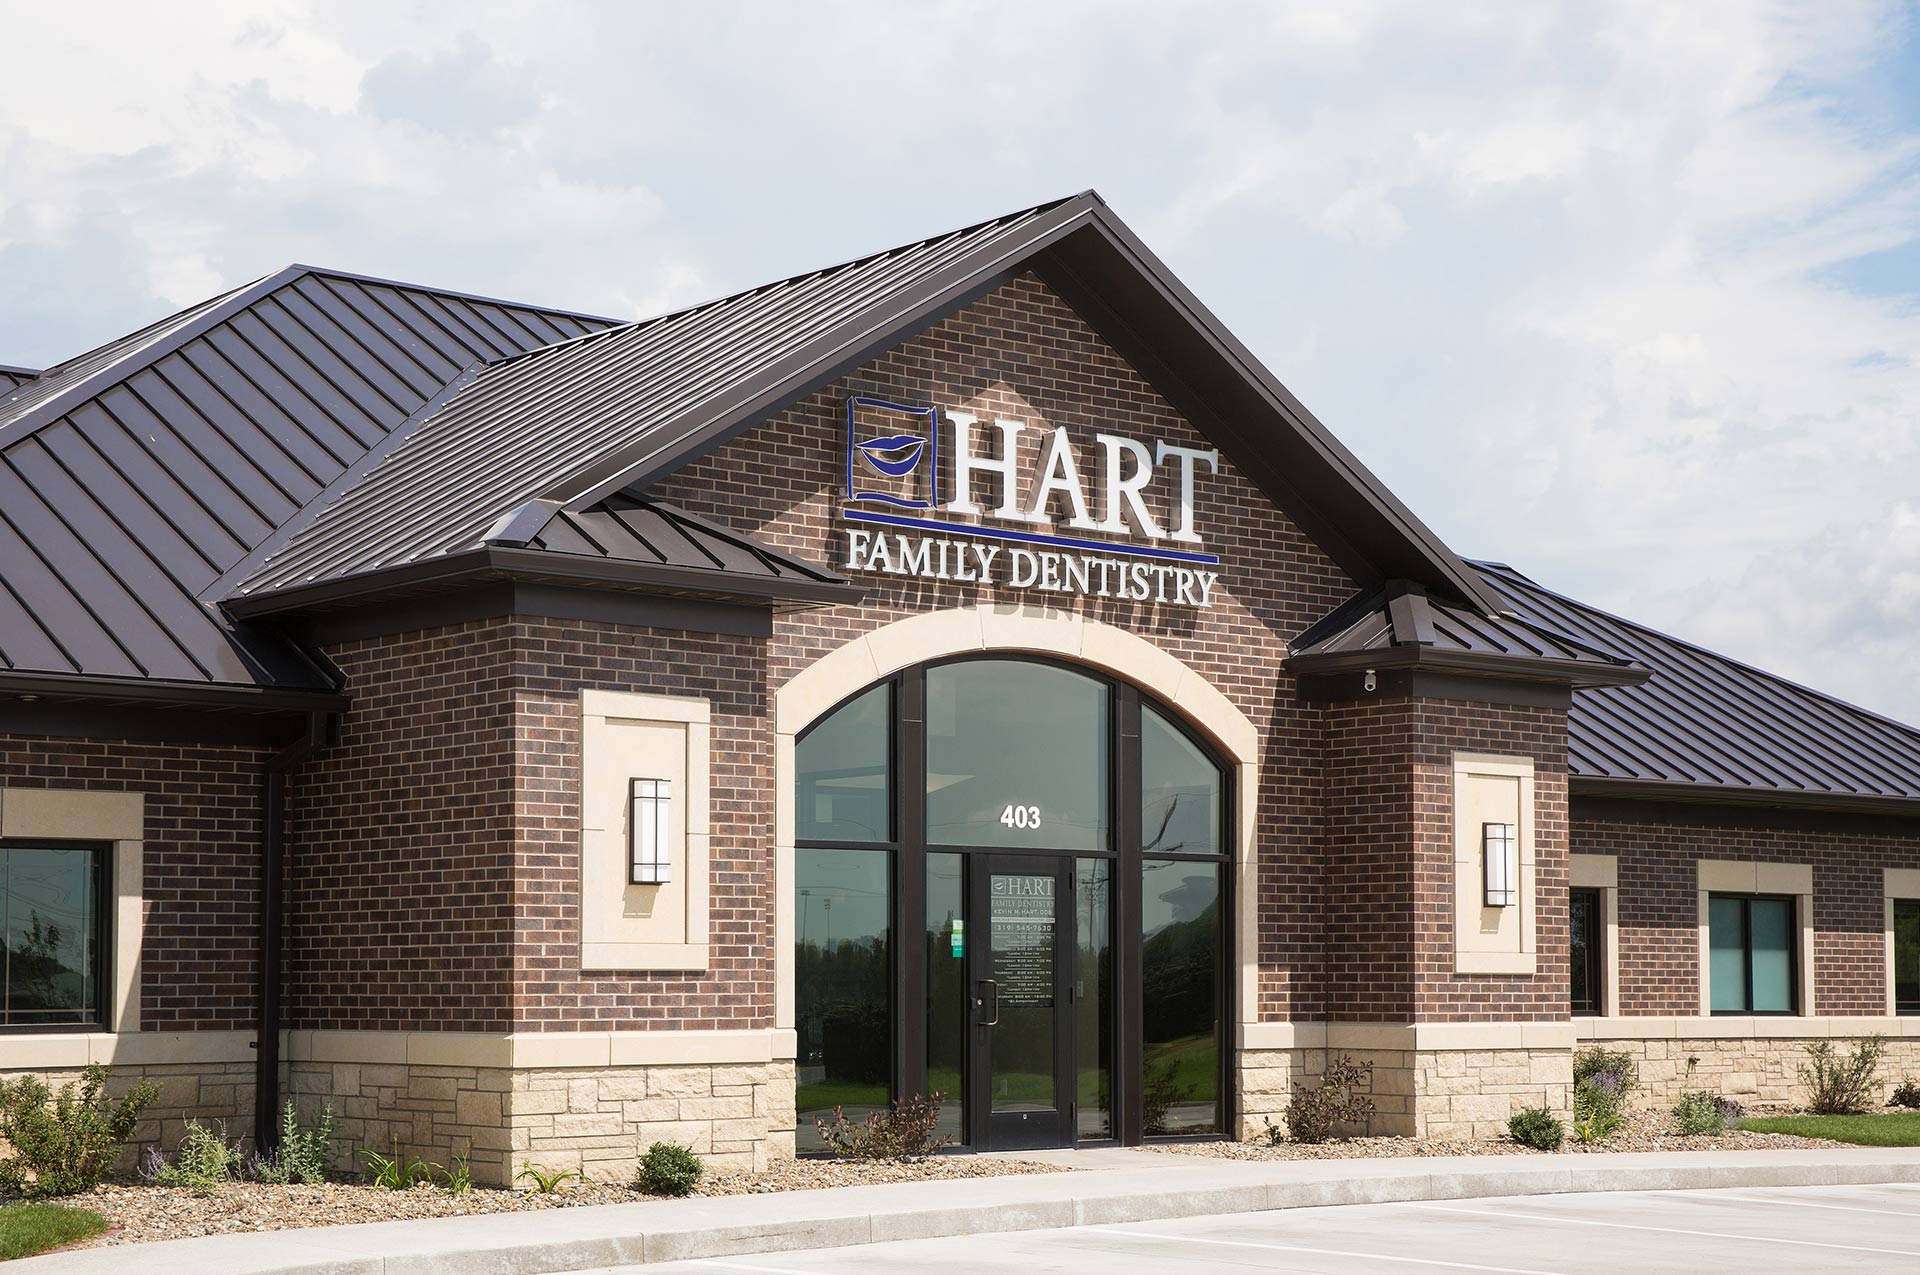 hart family dentistry building